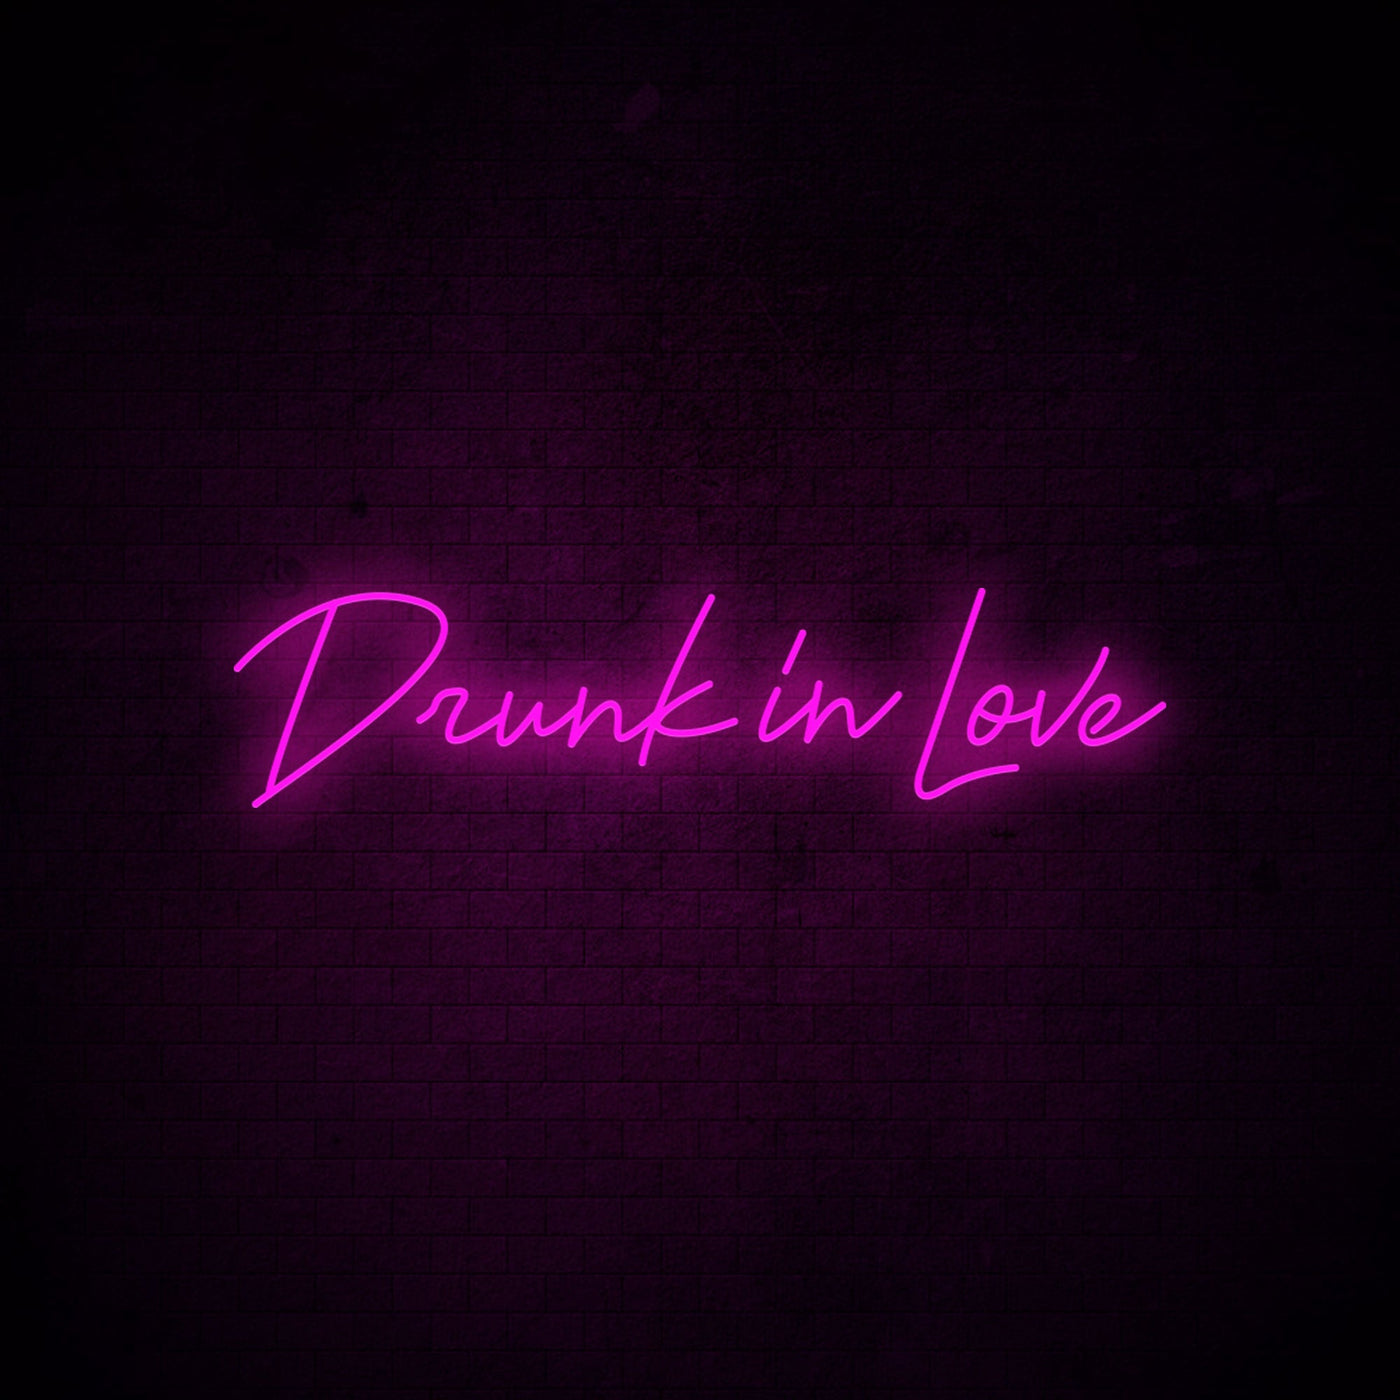 Drunk In Love Neon Signs Led Neon Lighting